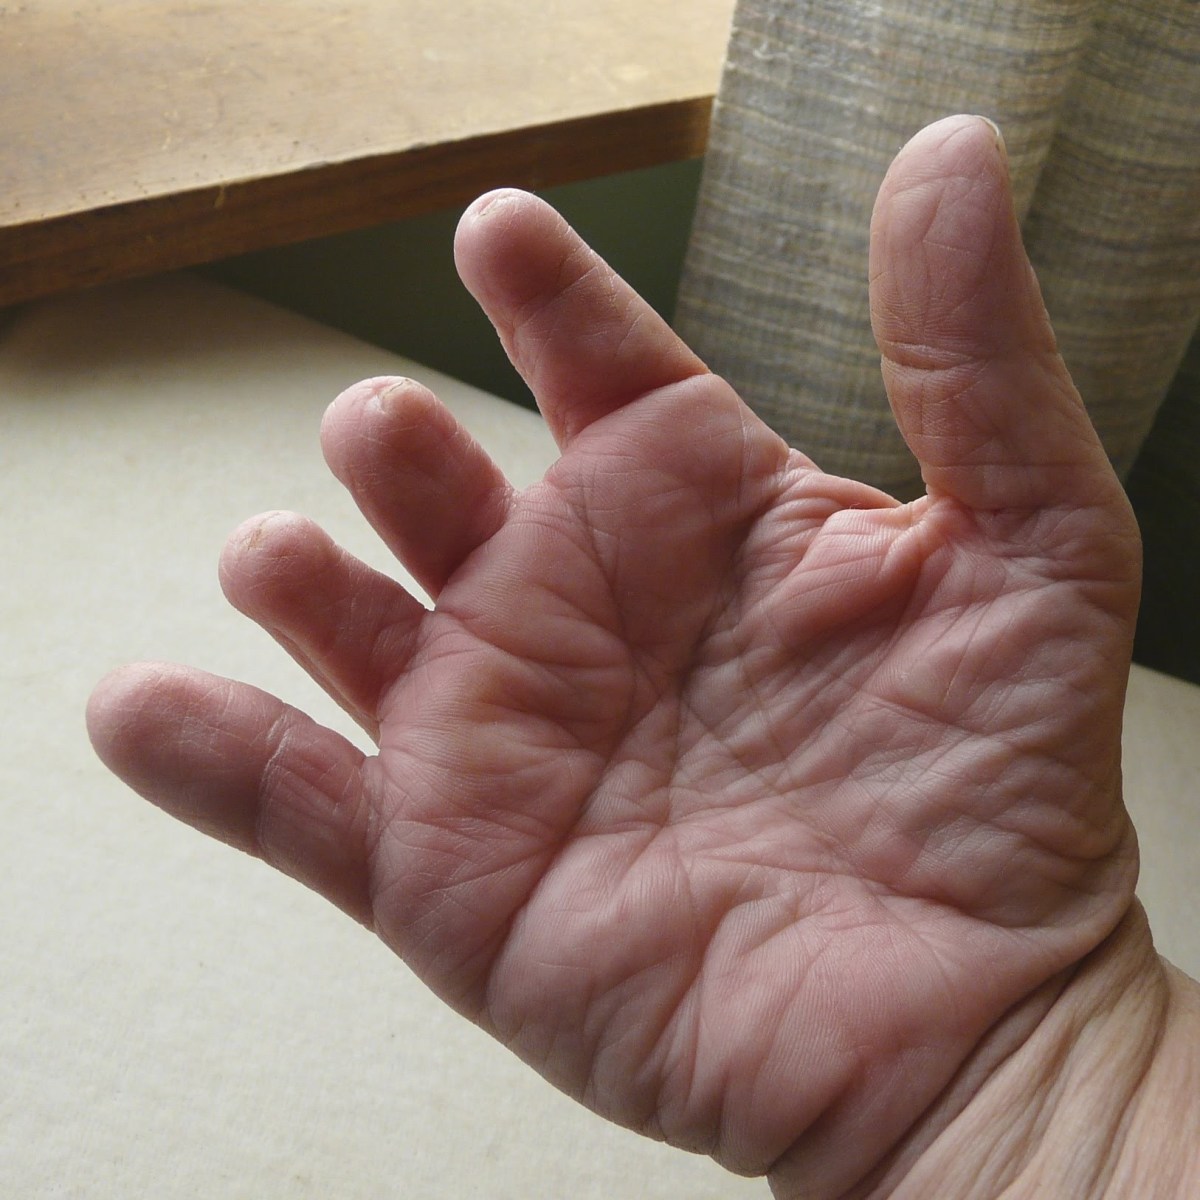 Palm of sym hand showing tiny fingernails